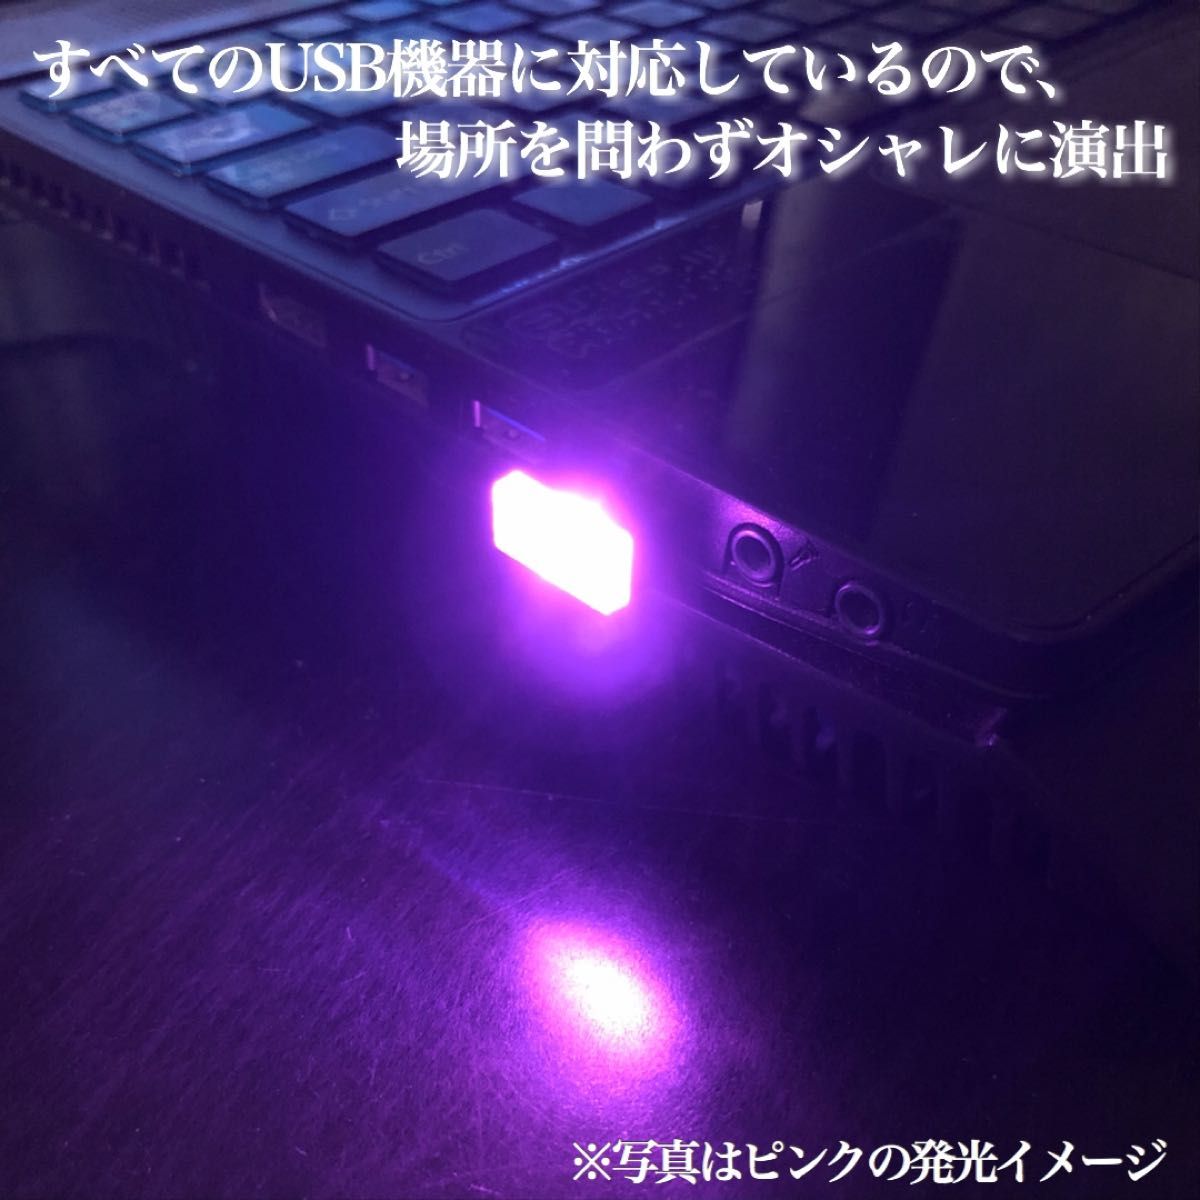 USB イルミライト 車内 ピンク LED イルミネーション 車内照明 室内夜間ライト USBポート カバー 防塵 オシャレ